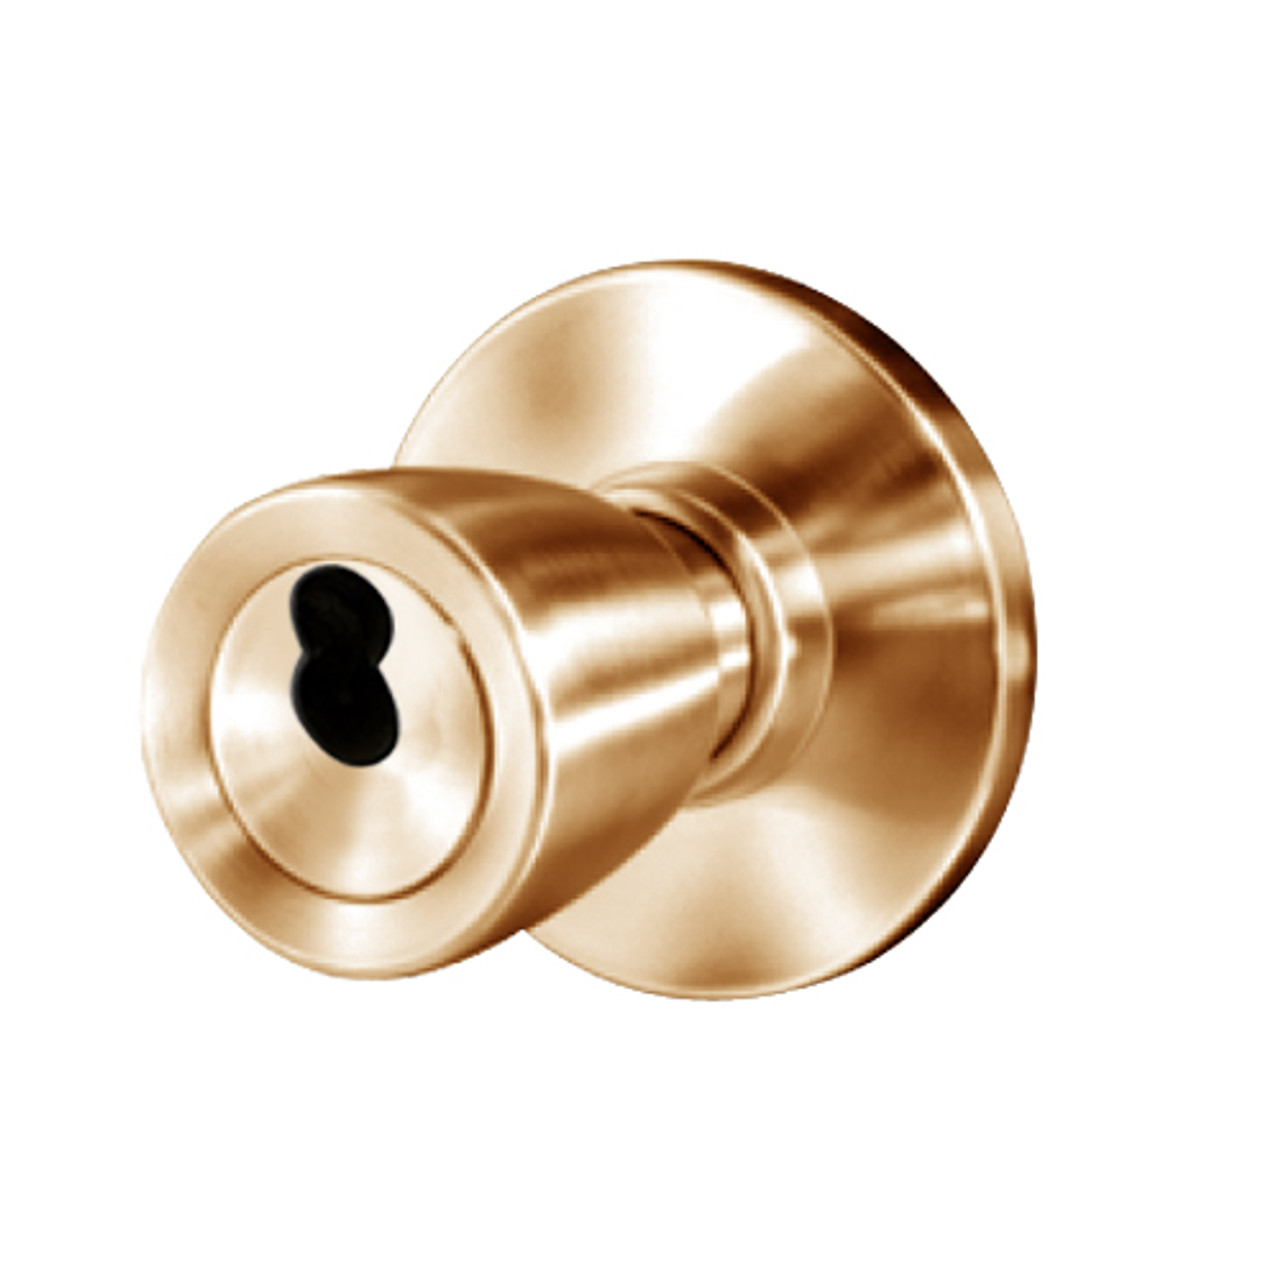 8K47YR6ASTK611 Best 8K Series Exit Heavy Duty Cylindrical Knob Locks with Tulip Style in Bright Bronze